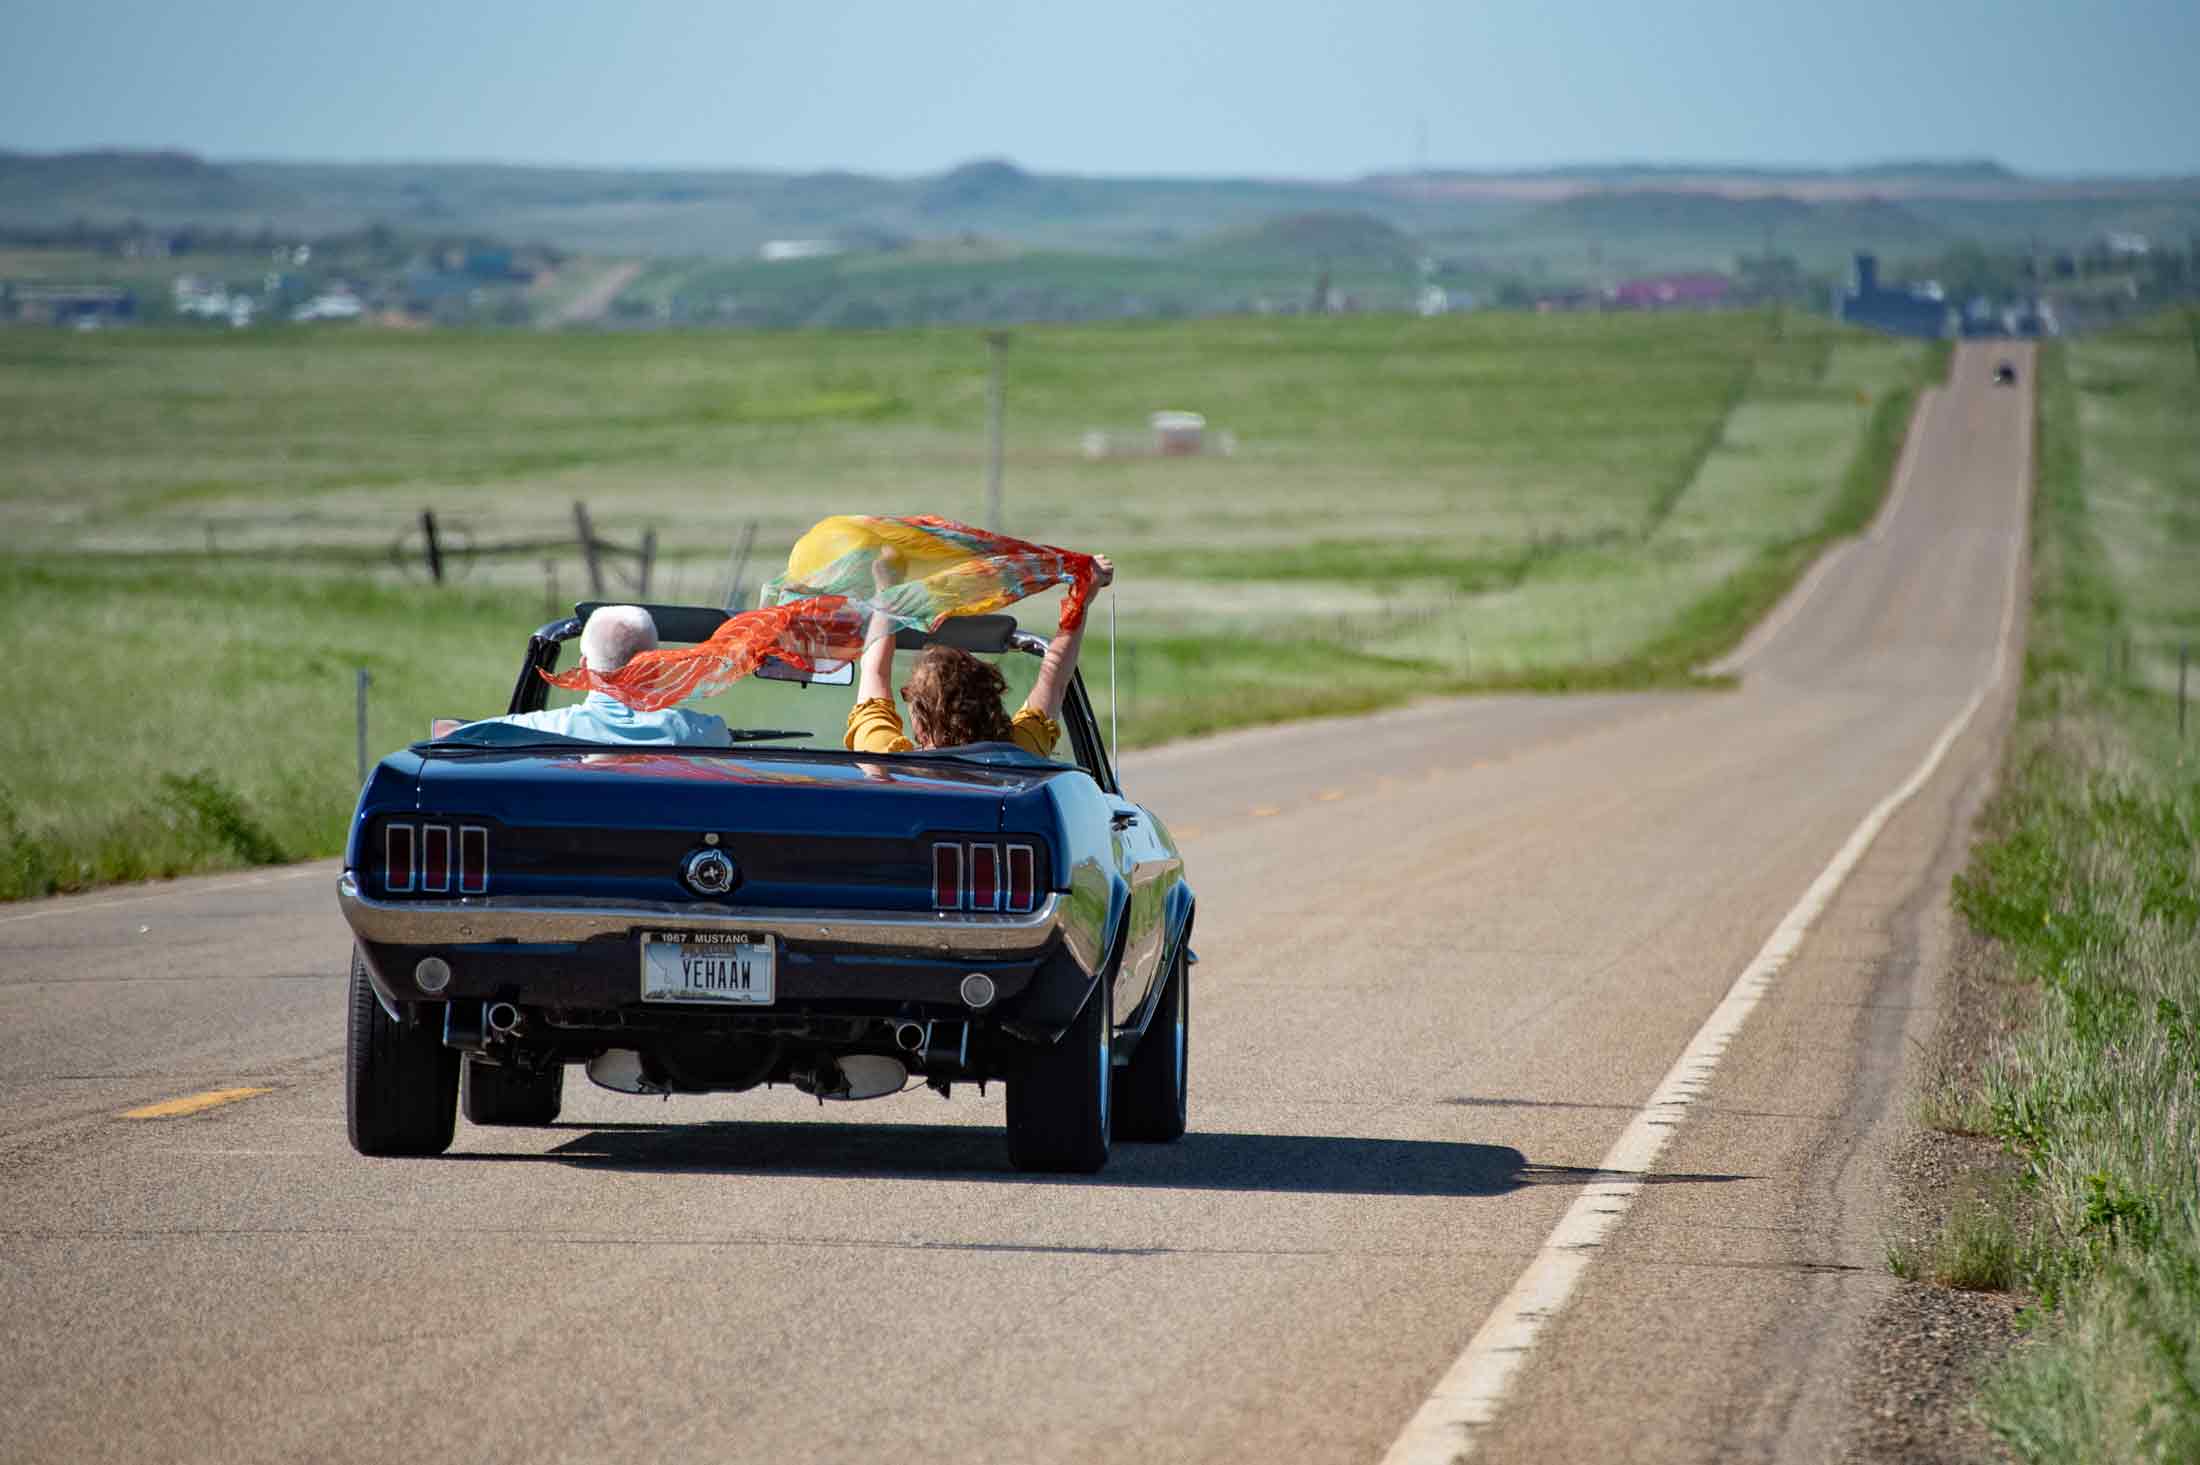 Wild, Wacky and Wonderful: A Road Trip Through Southeast Montana